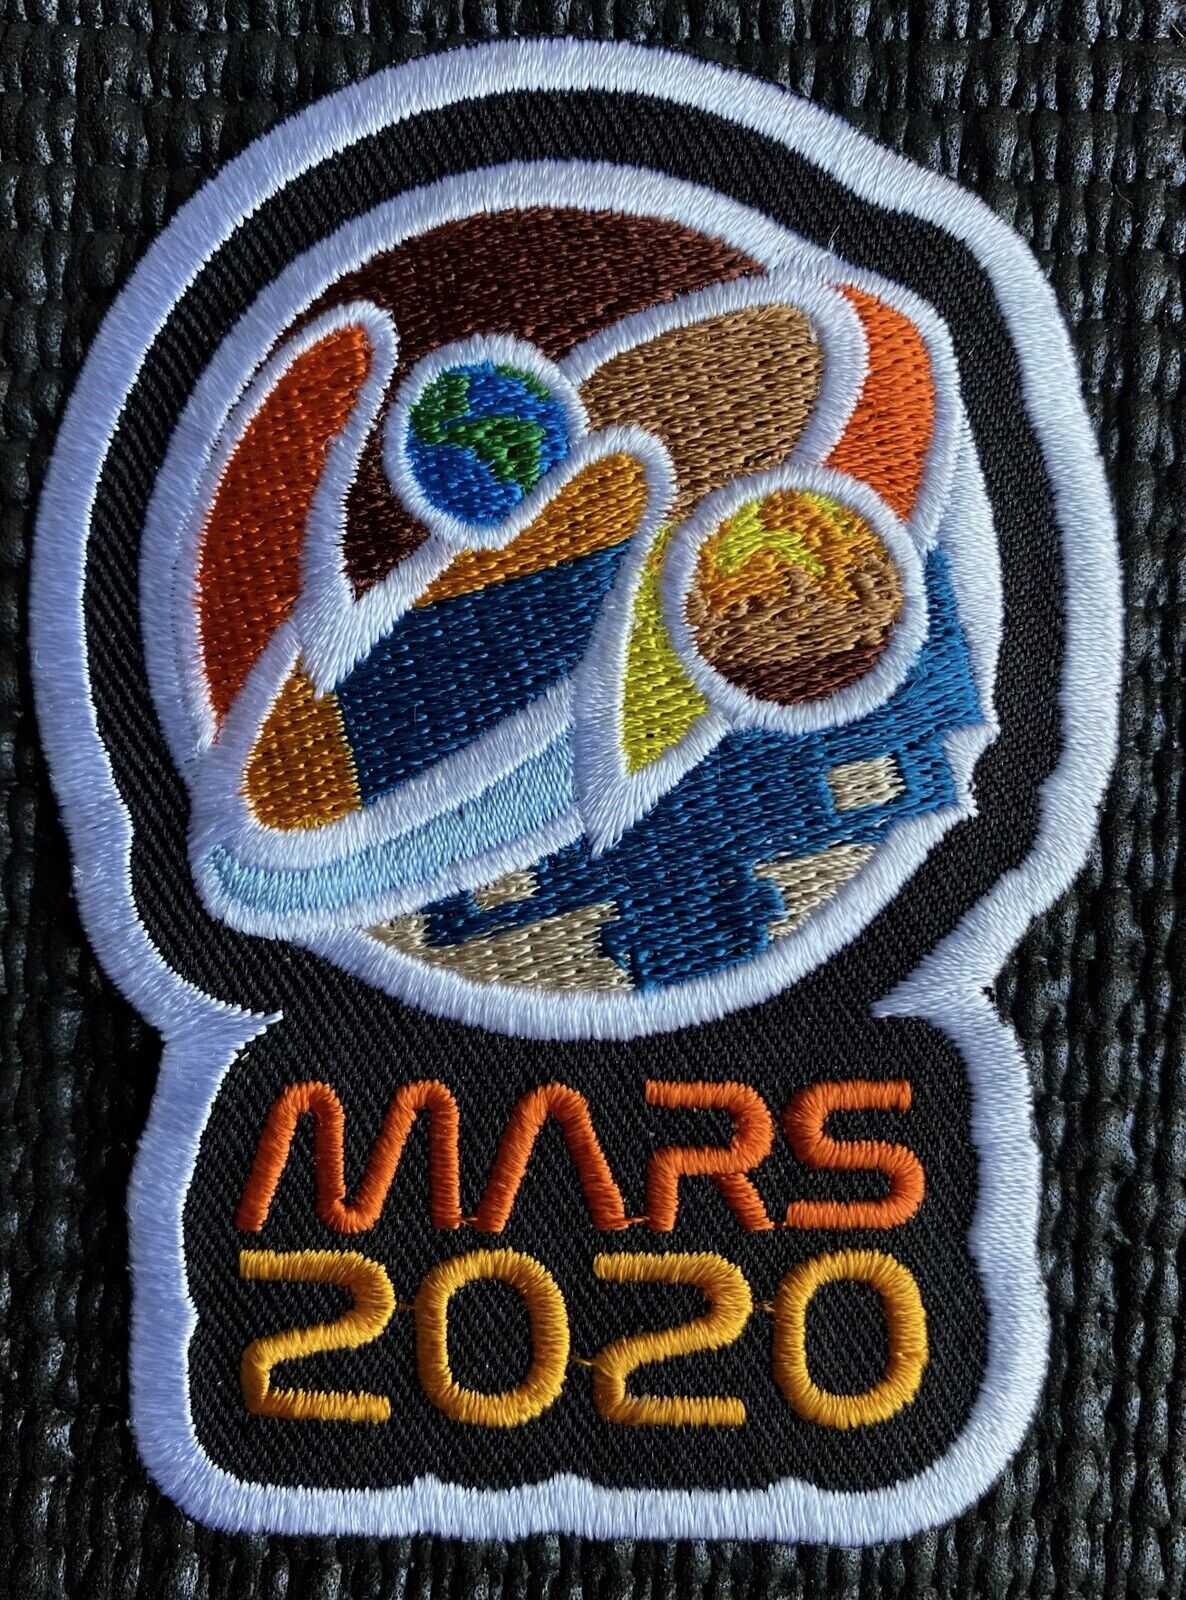 NASA JPL - MARS 2020 PERSEVERANCE ROVER - Exploration Program Mission PATCH